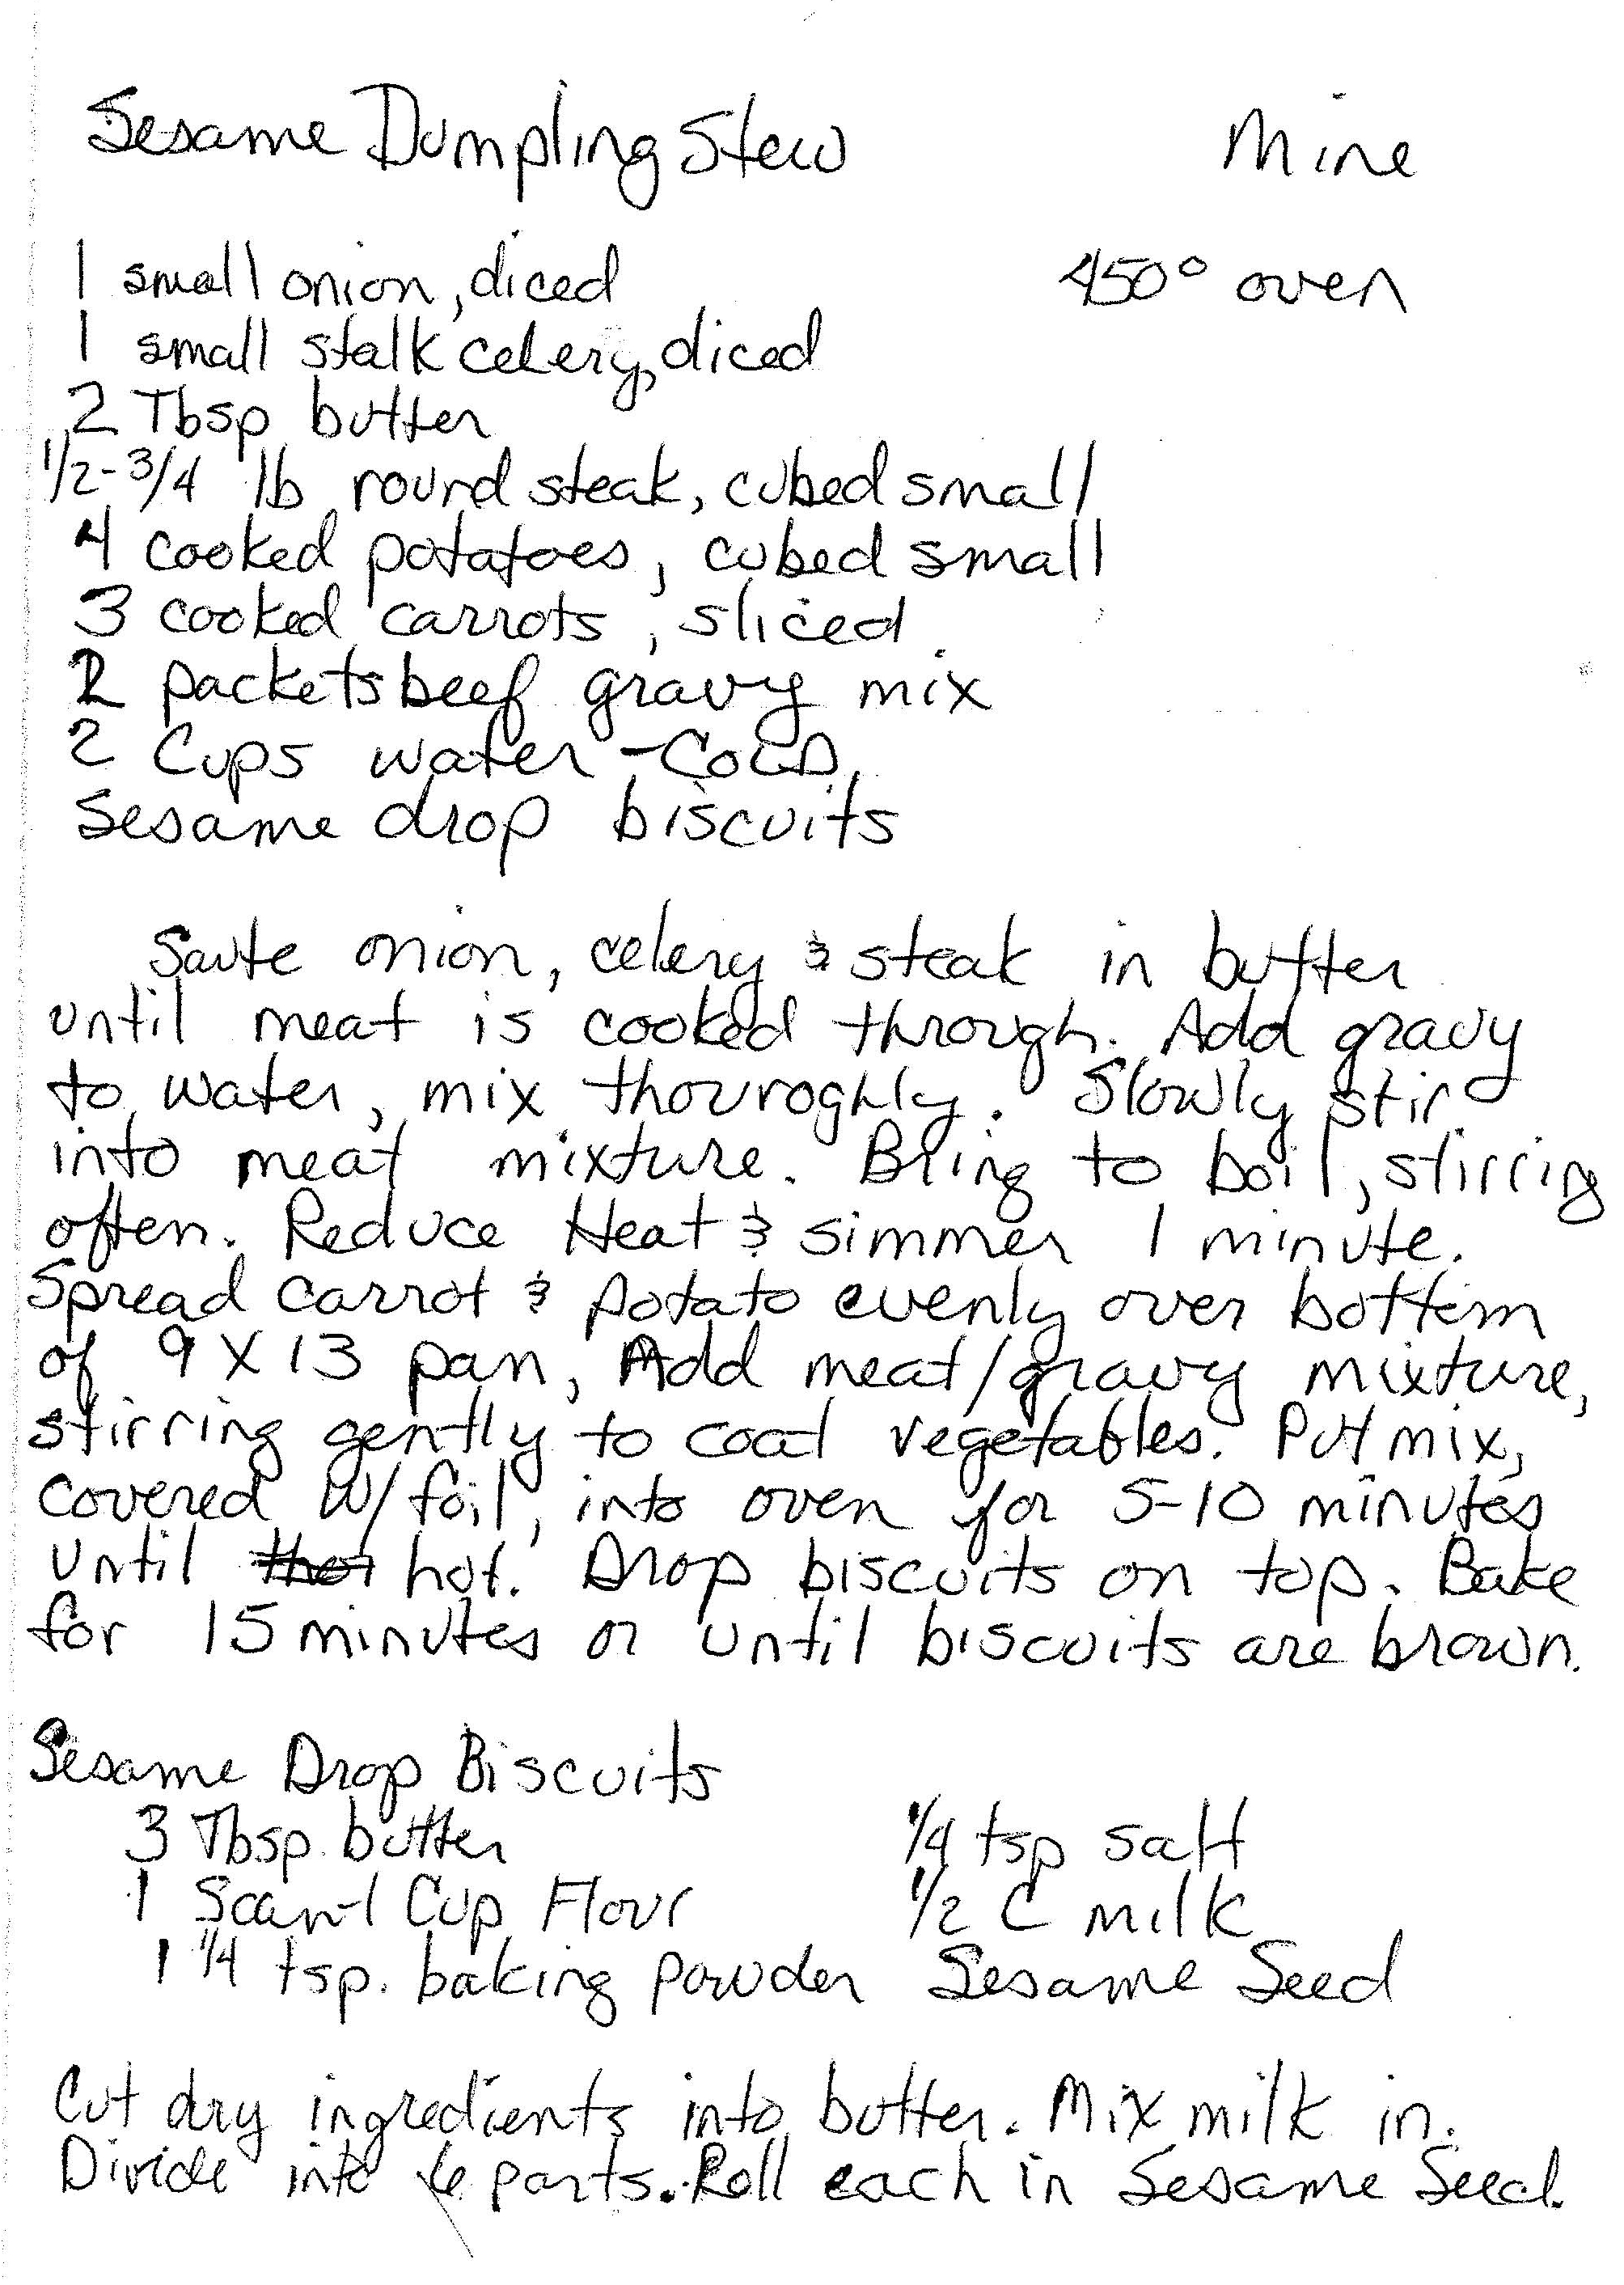 Sesame Dumpling Stew Recipe